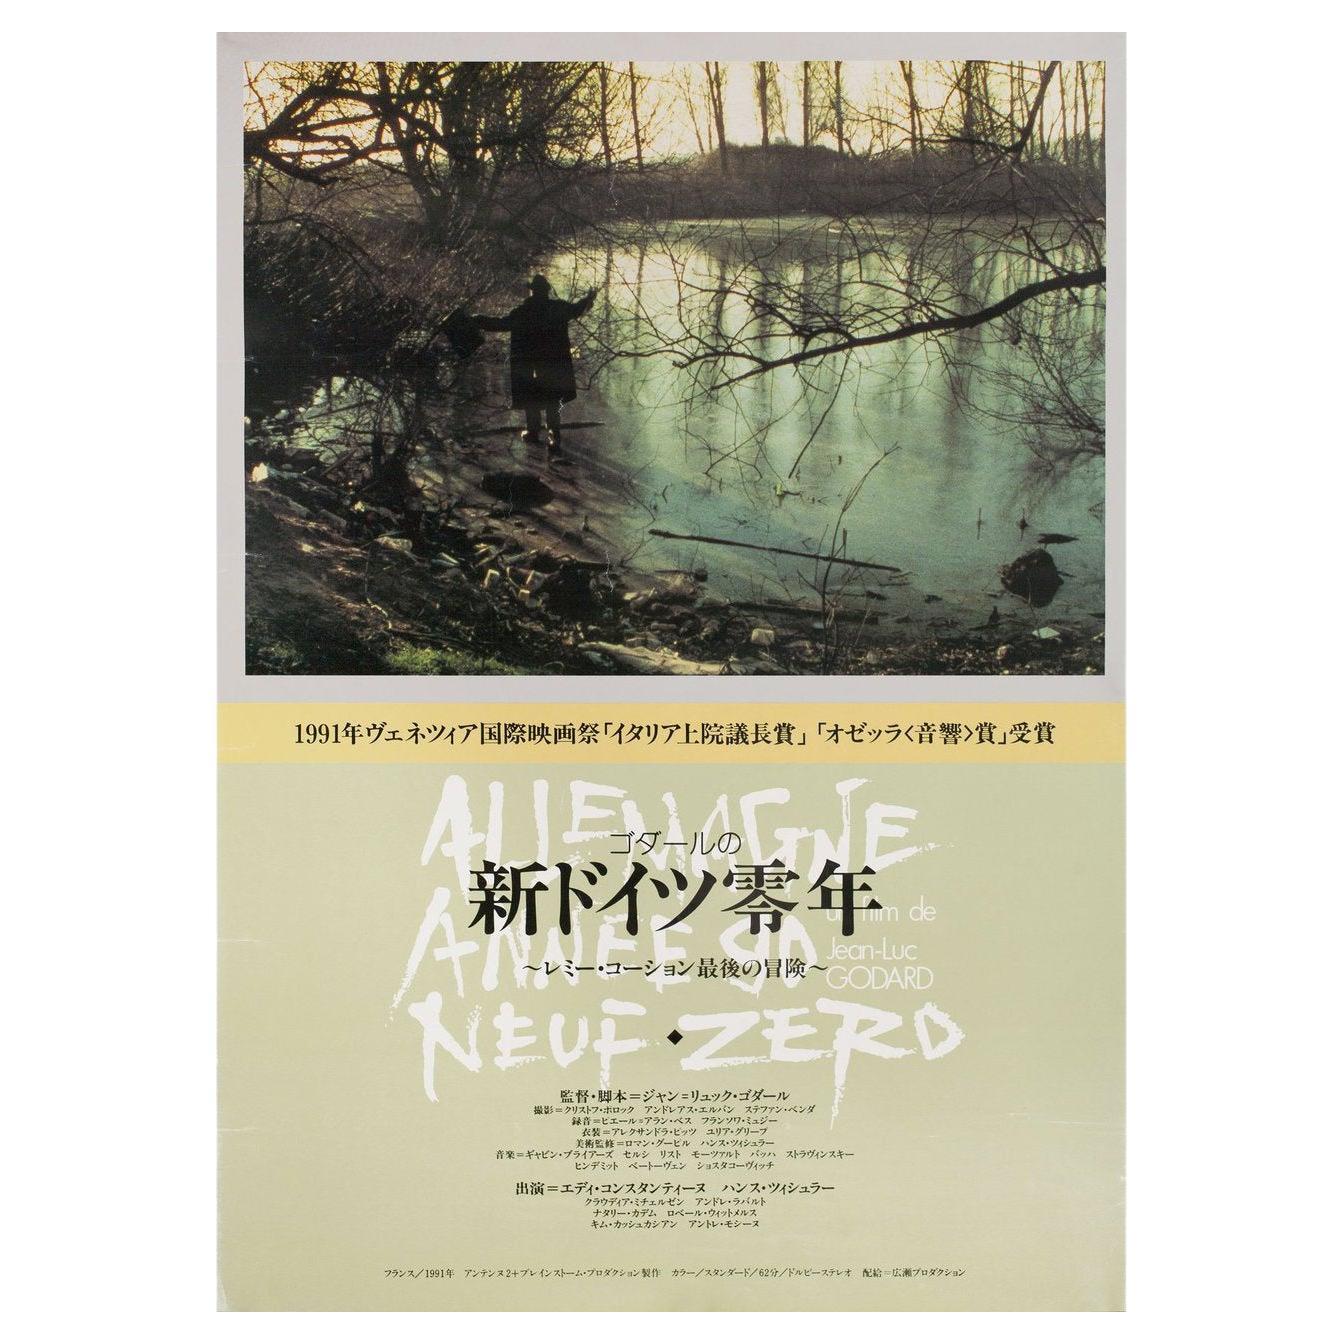 Germany Year 90 Nine Zero 1991 Japanese B2 Film Poster For Sale